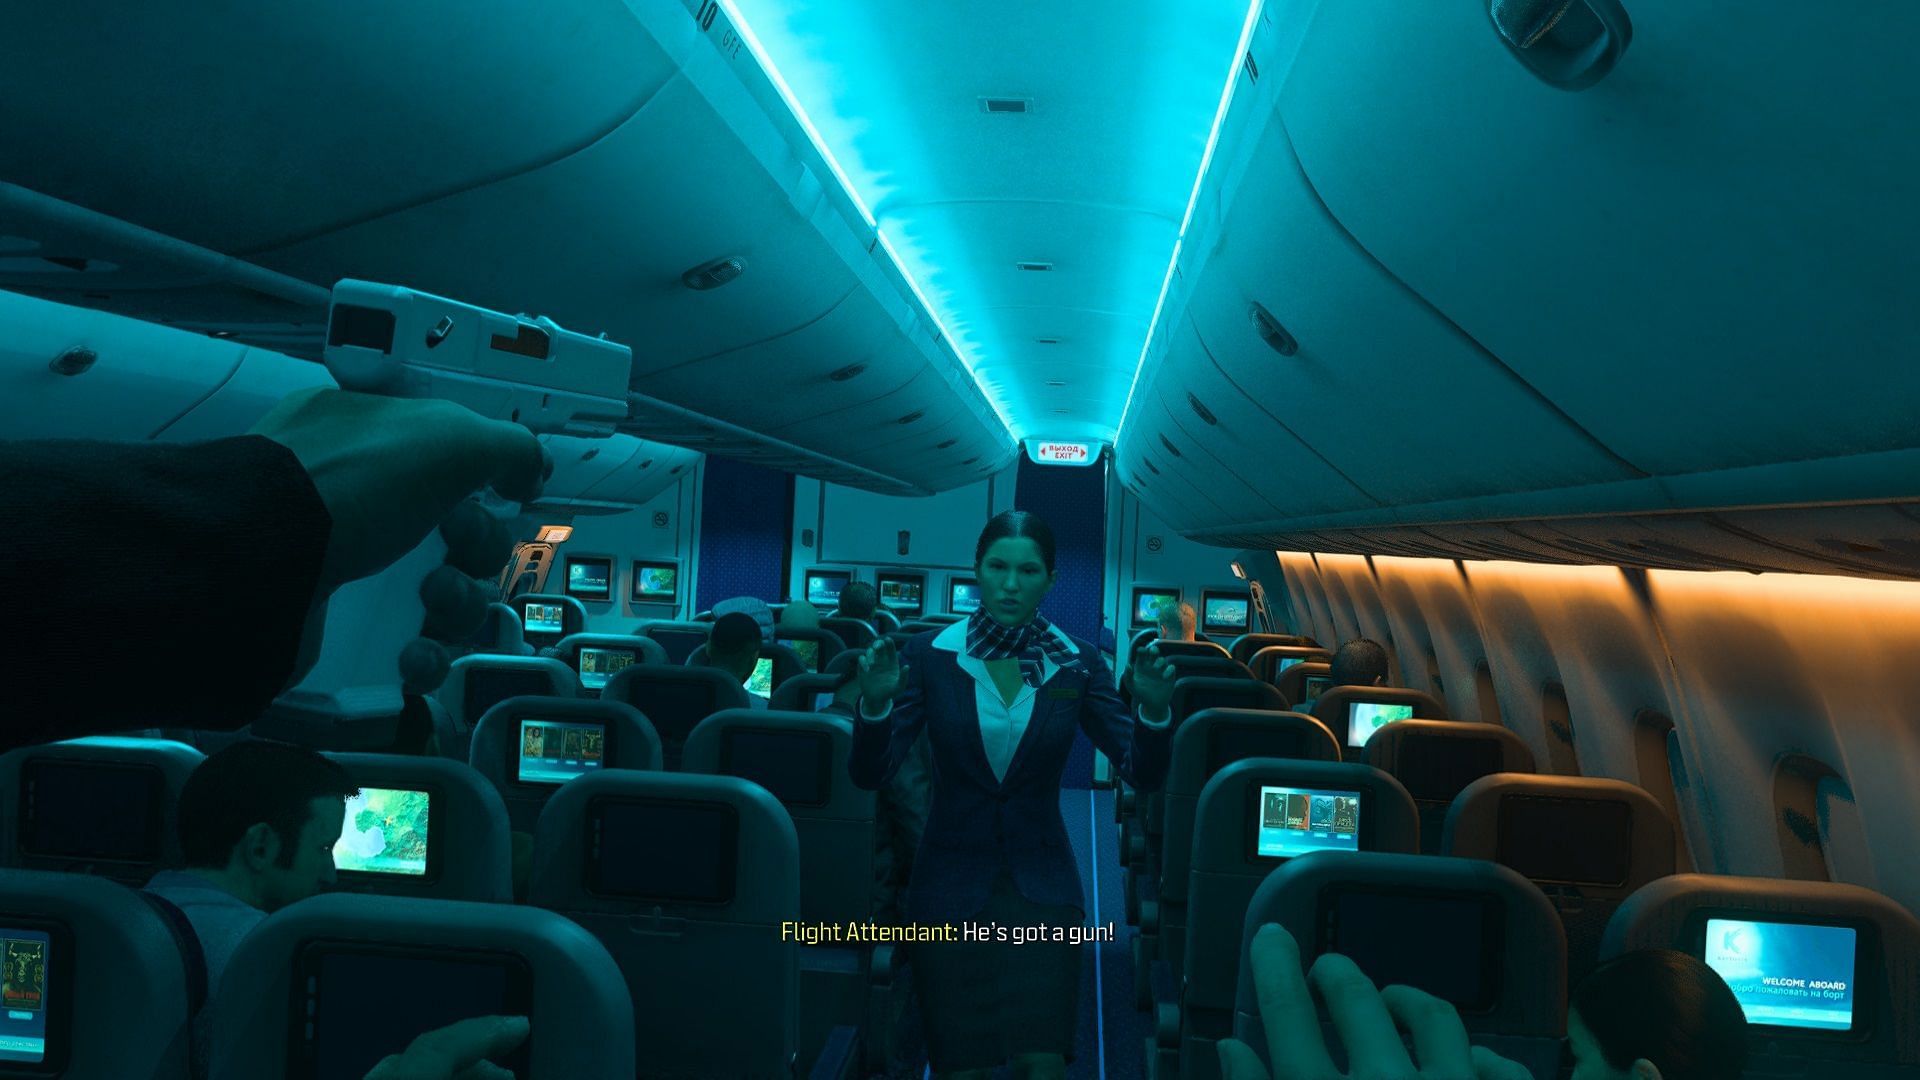 A hijacker pointing his gun at a flight attendant